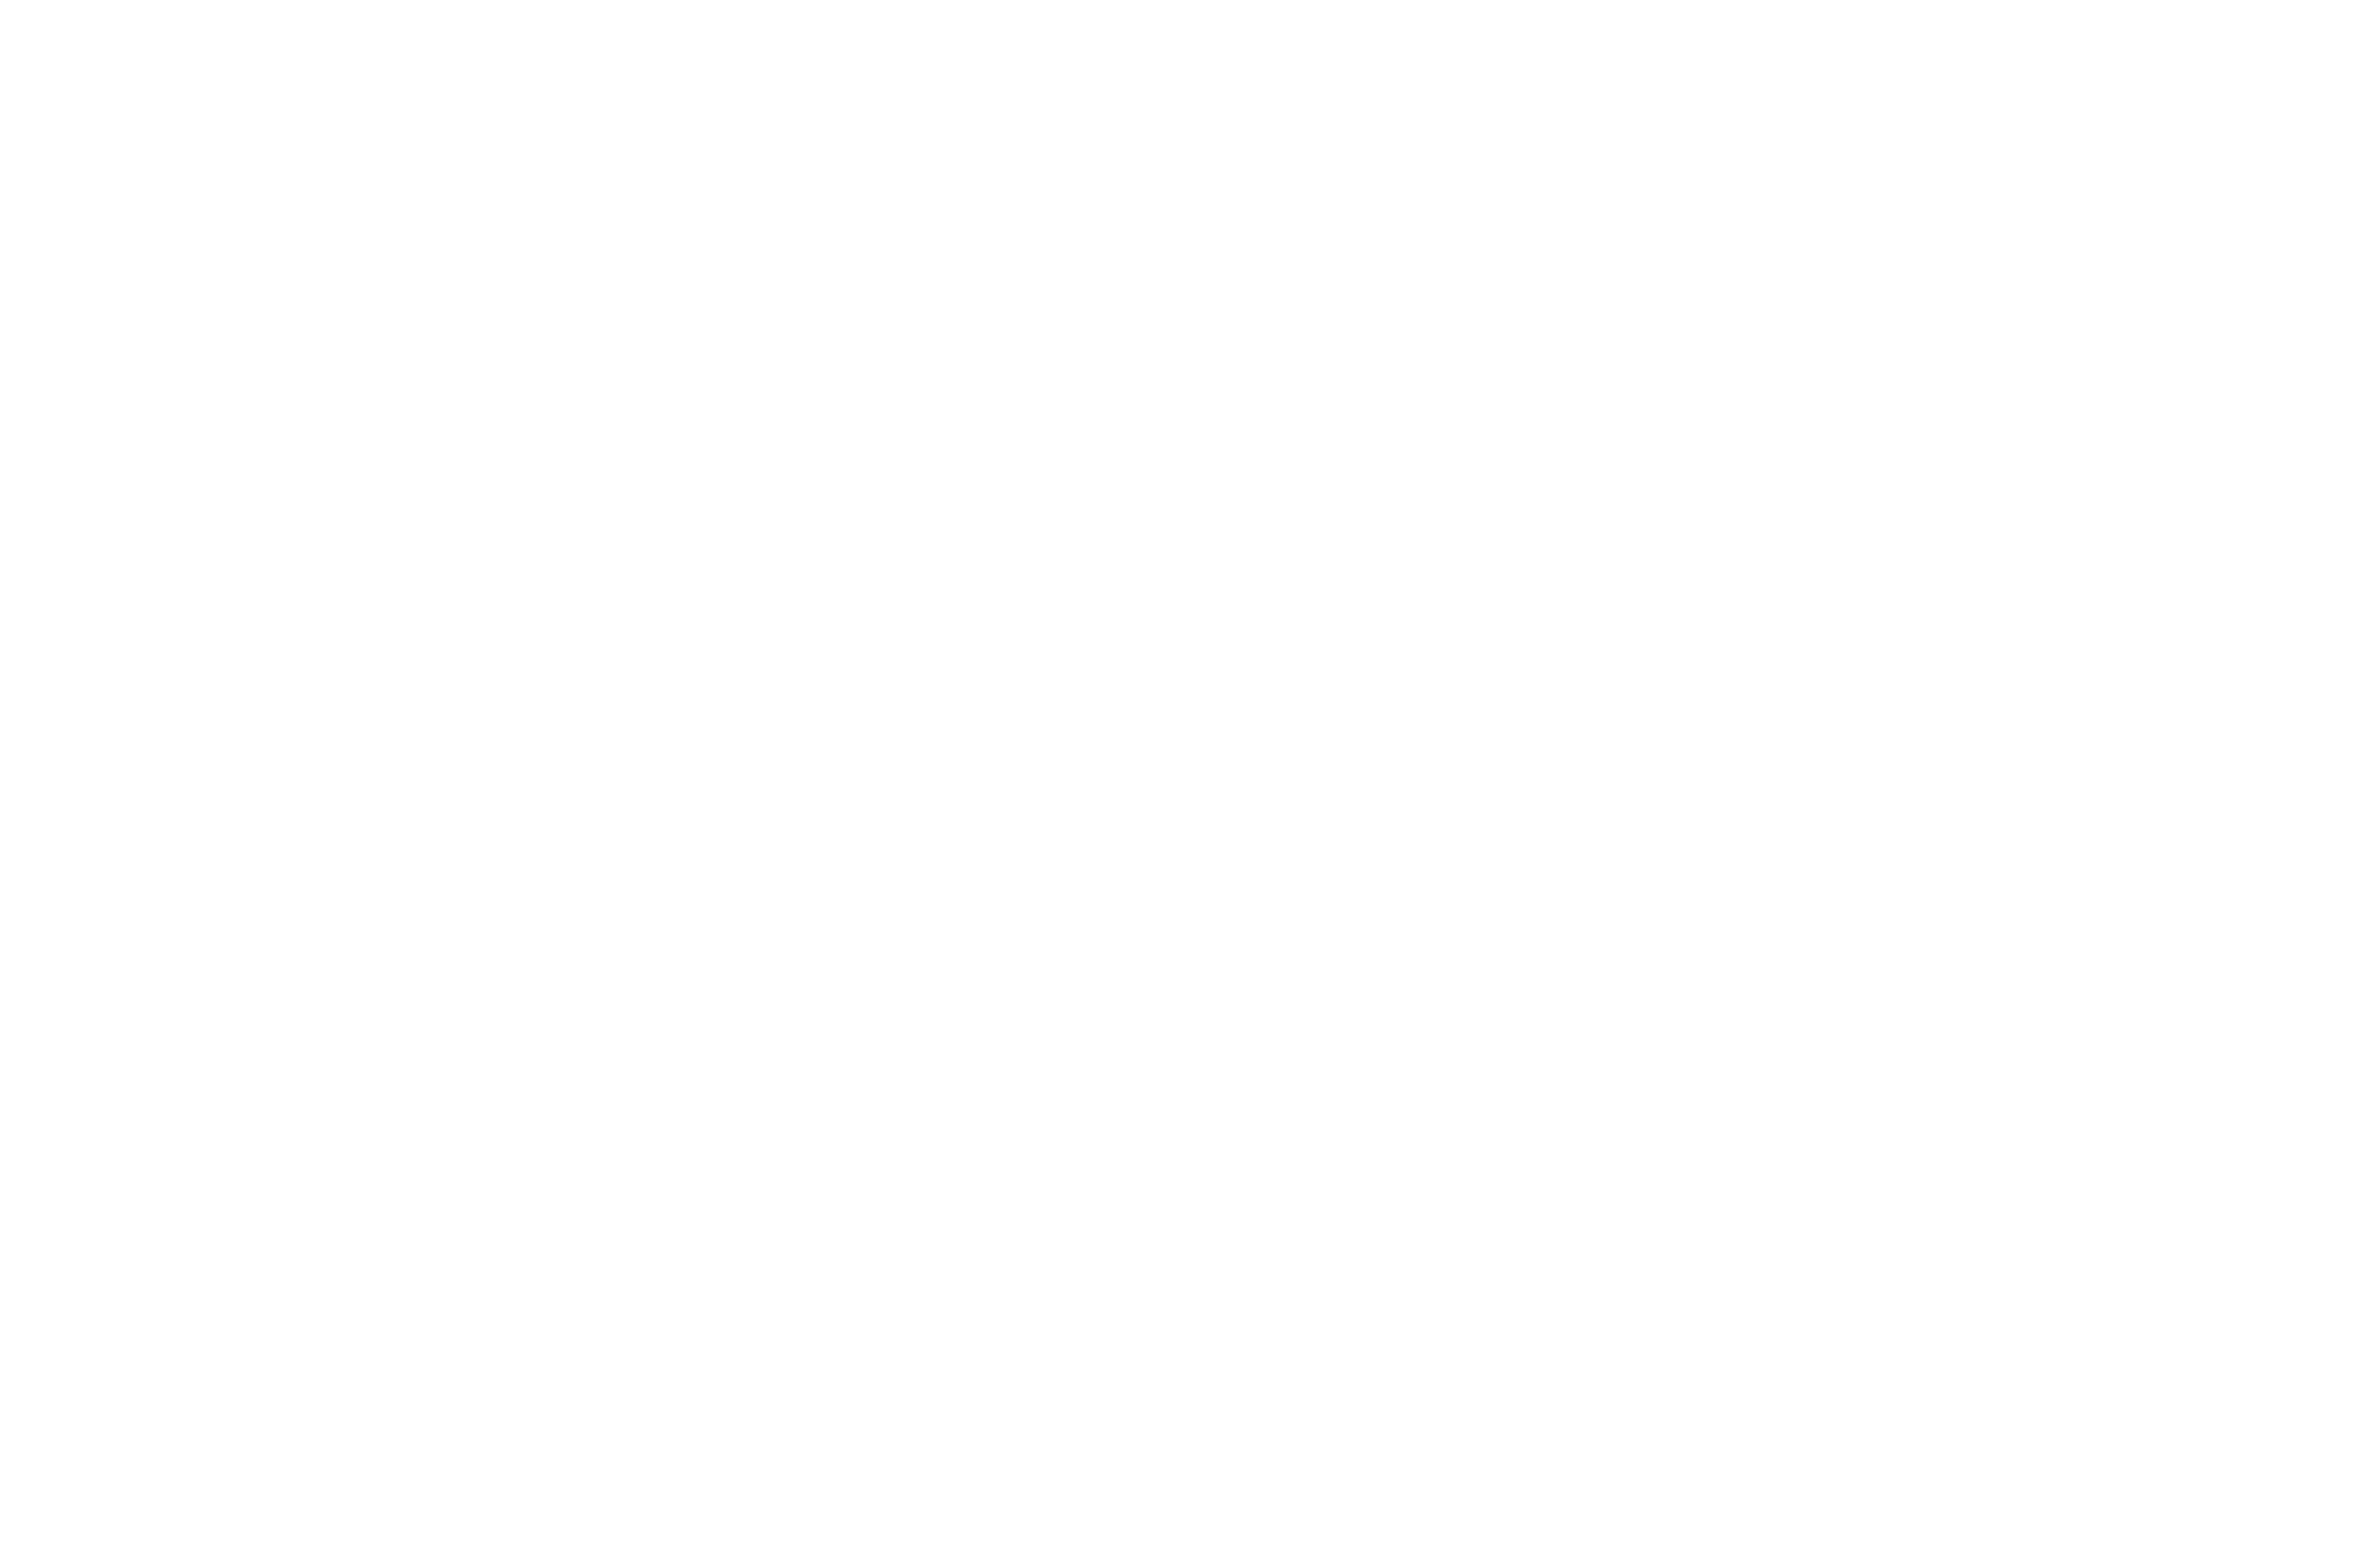 Bonnie Nicol